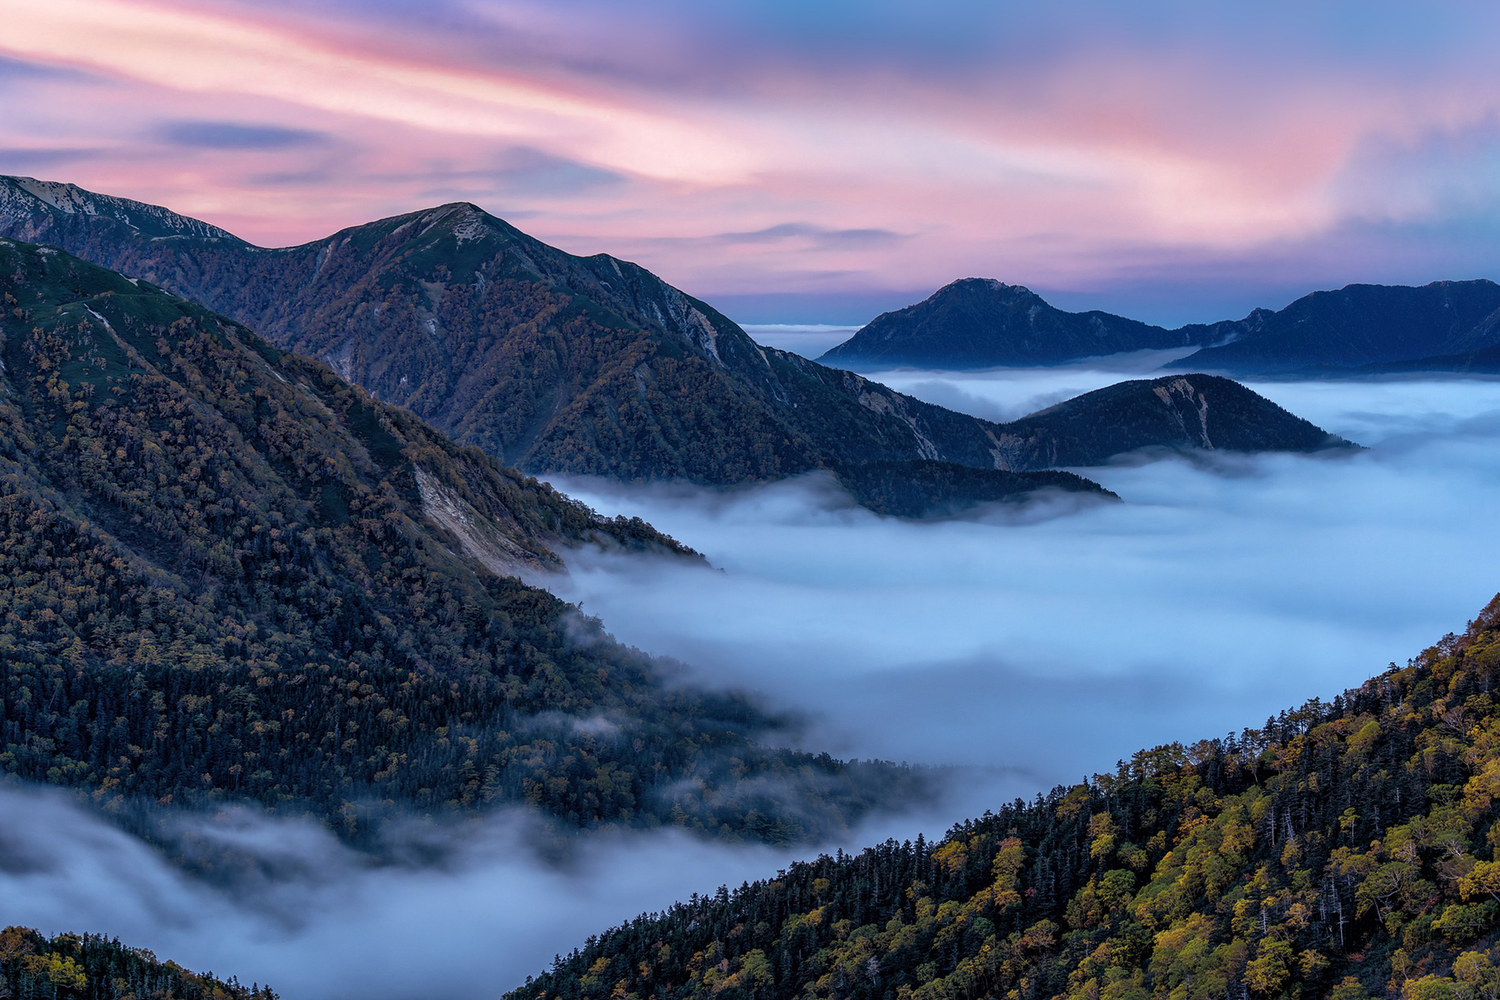 Nebel-Landschaften eindrucksvoll fotografieren